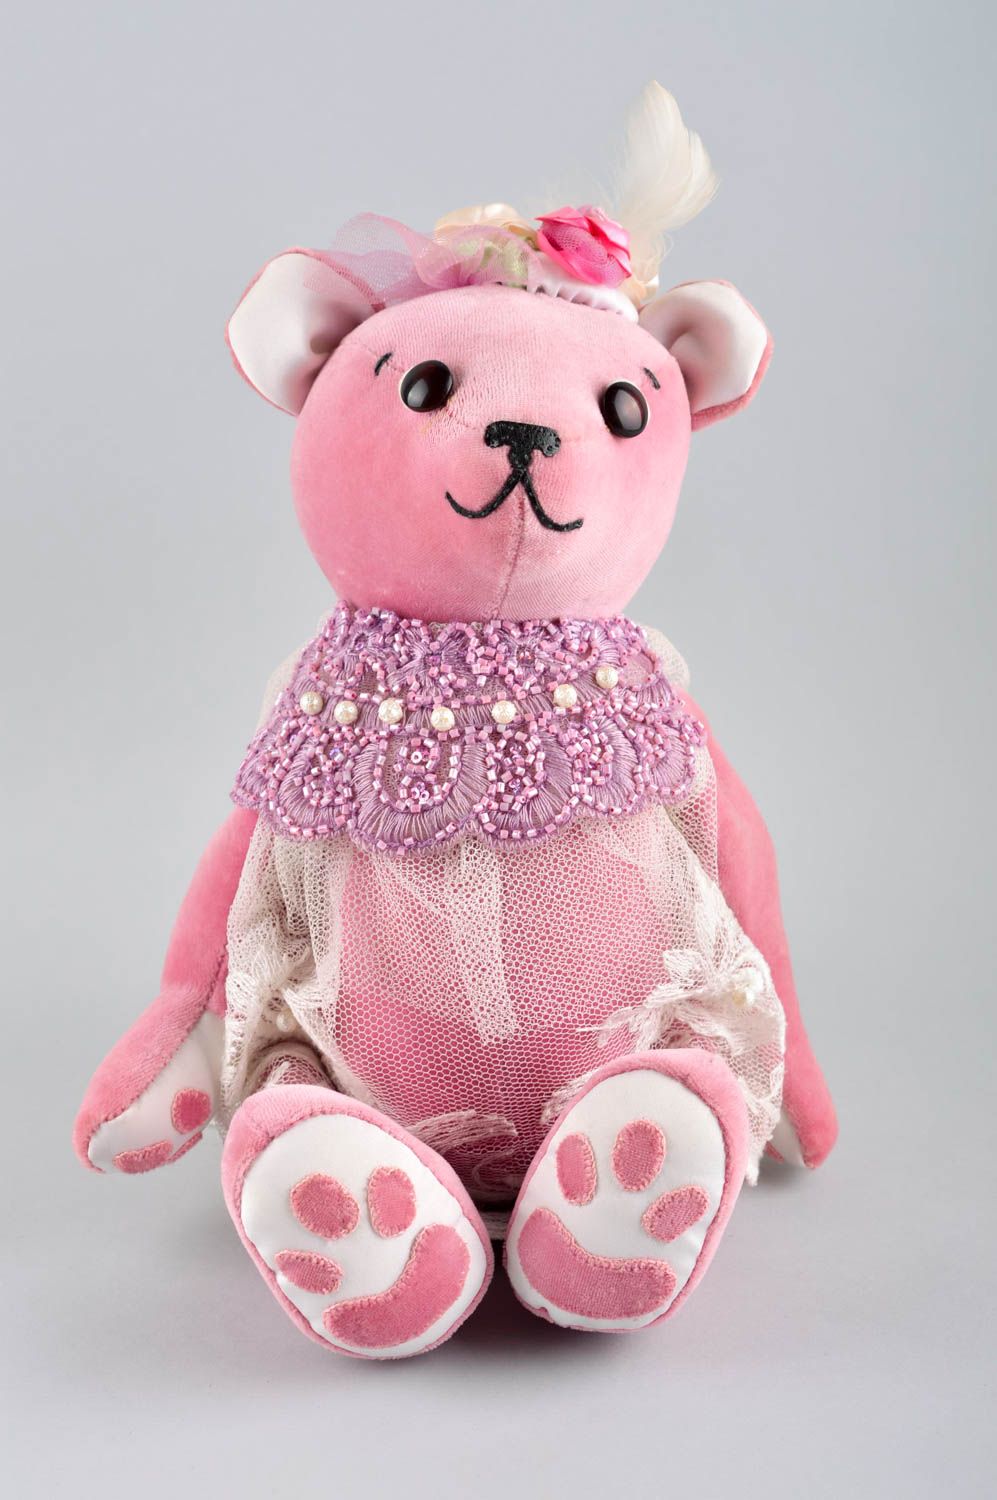 Handmade designer toy bear toy stuffed toys for children nursery decor photo 1